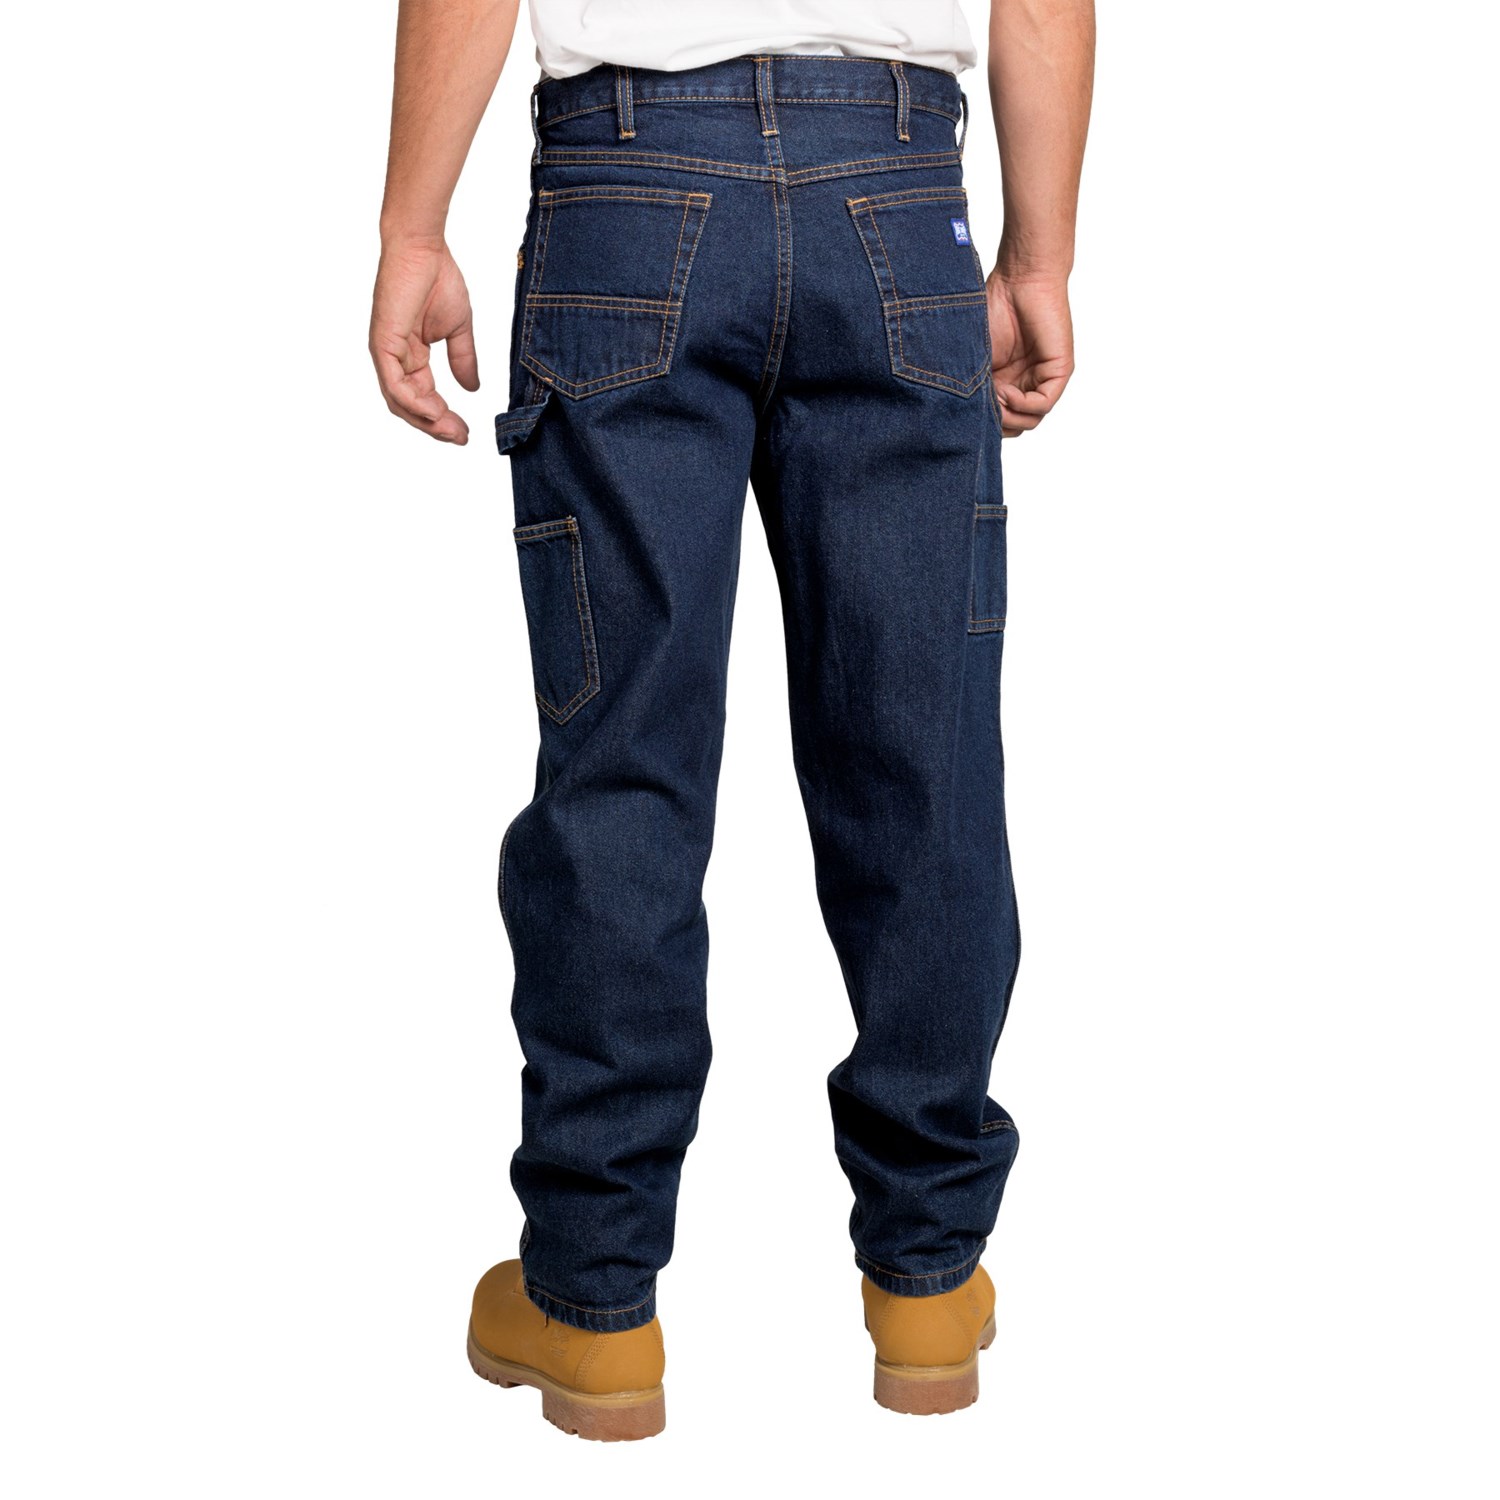 Big Smith Carpenter Jeans (For Men) 9686G - Save 65%